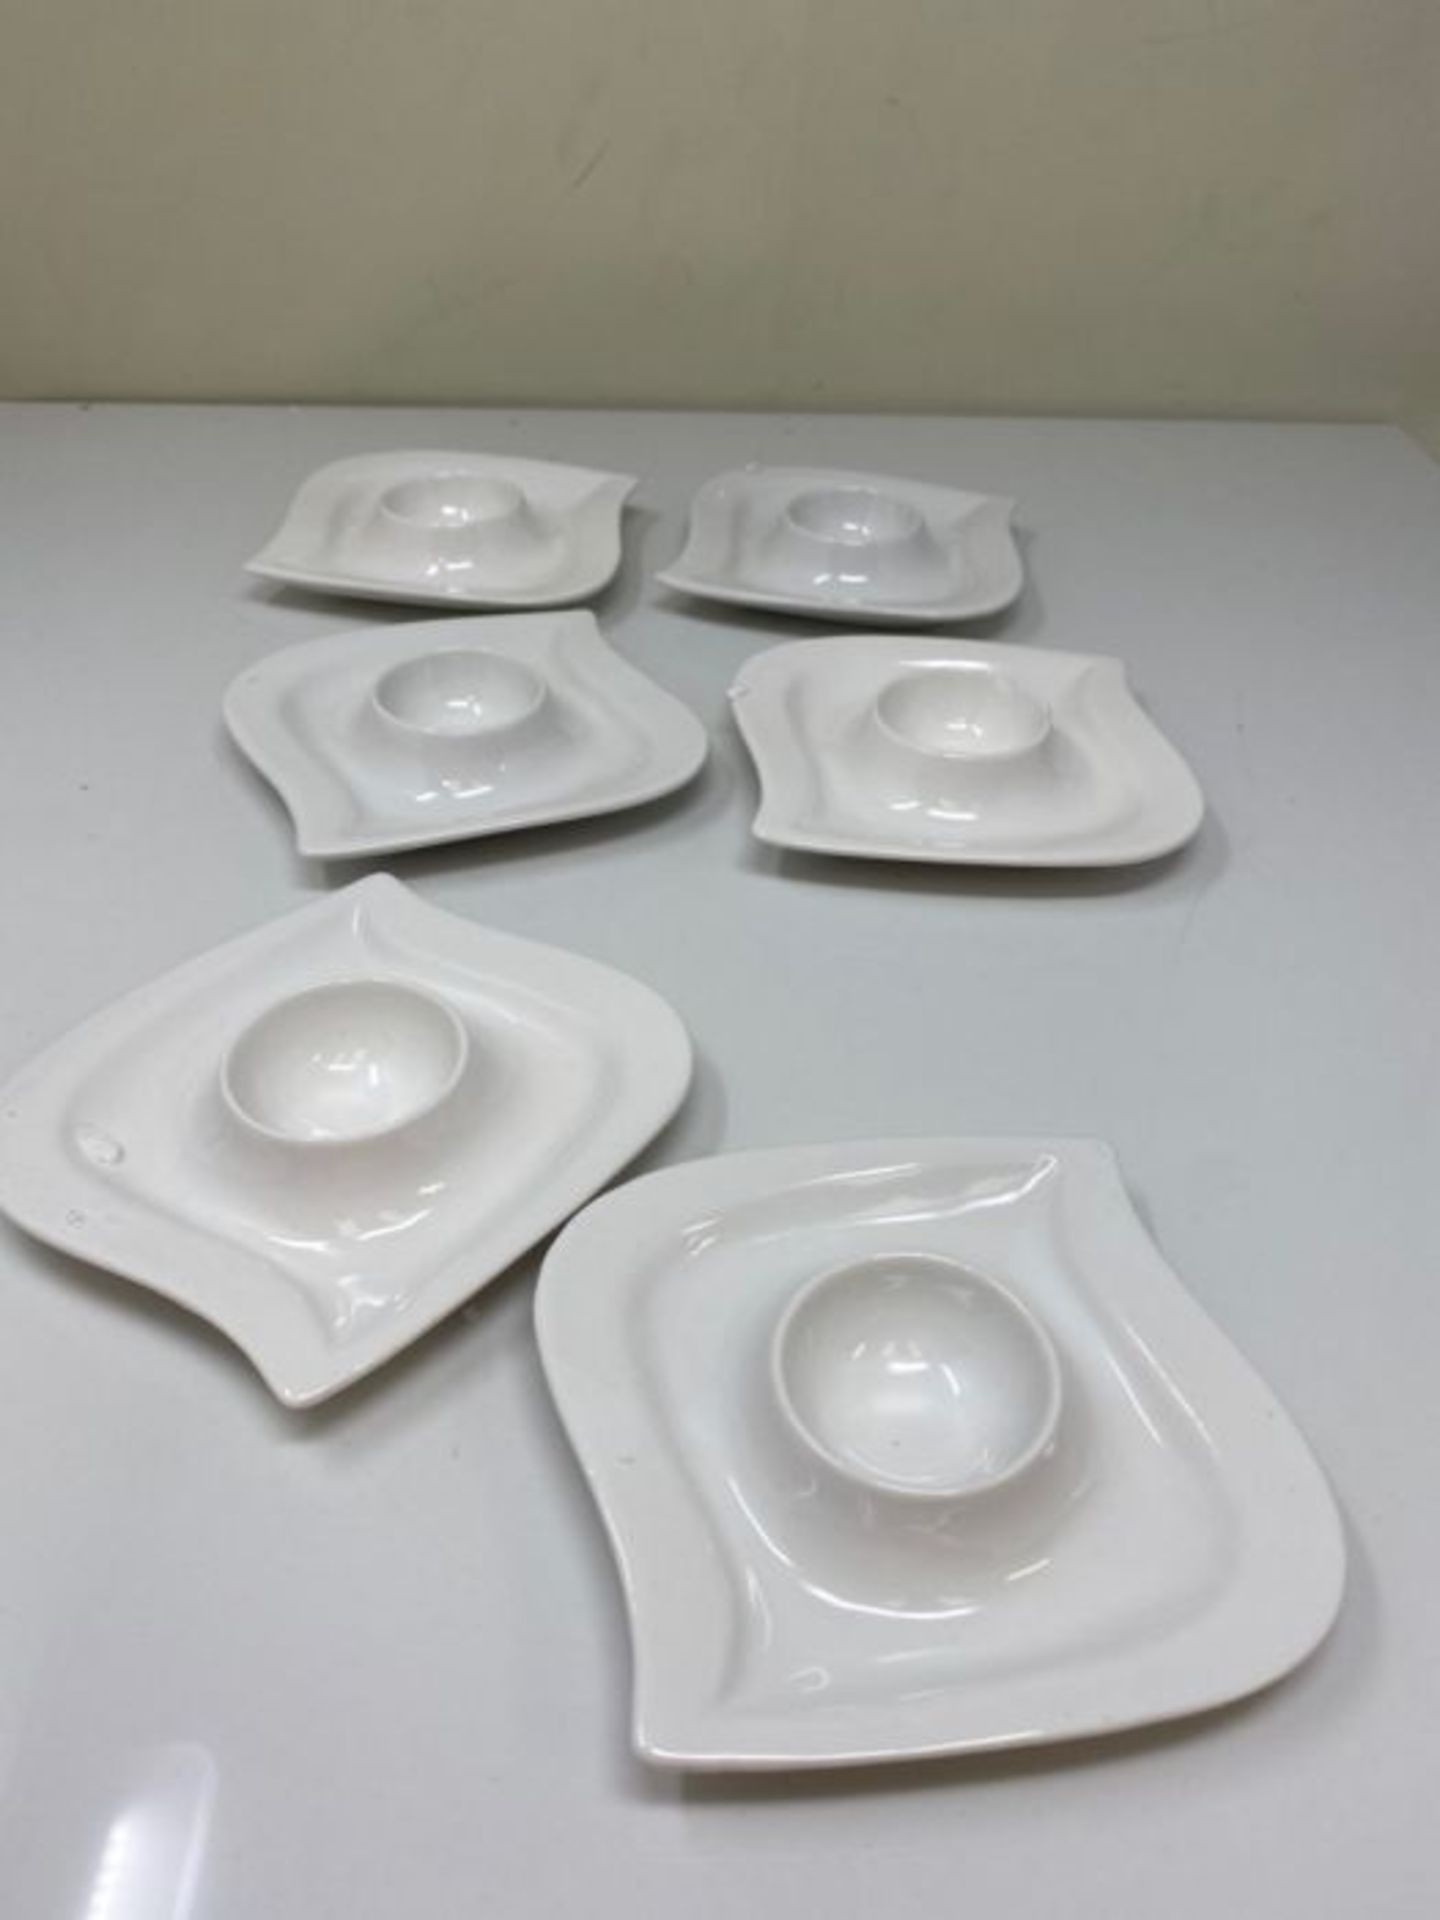 Schramm? 6 Egg Cups Curved Porcelain White Egg Holder with Shelf Egg Stand 6 Pack - Image 3 of 3